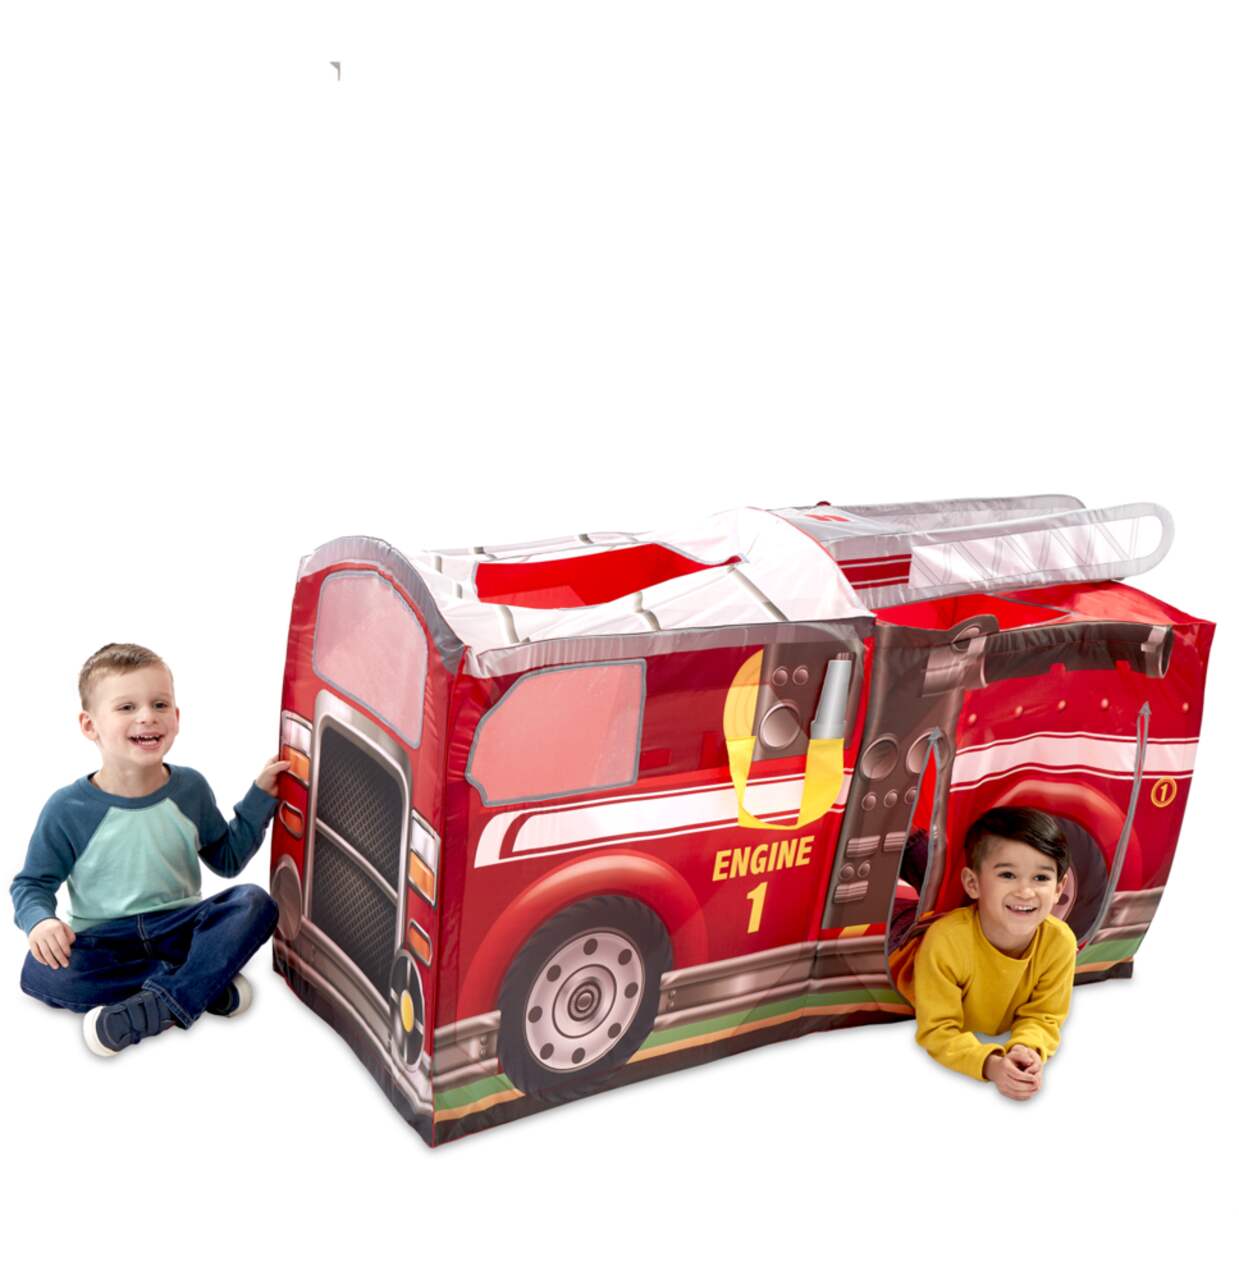 Playhut® Fire Truck Rescue Pop-Up Play Tent